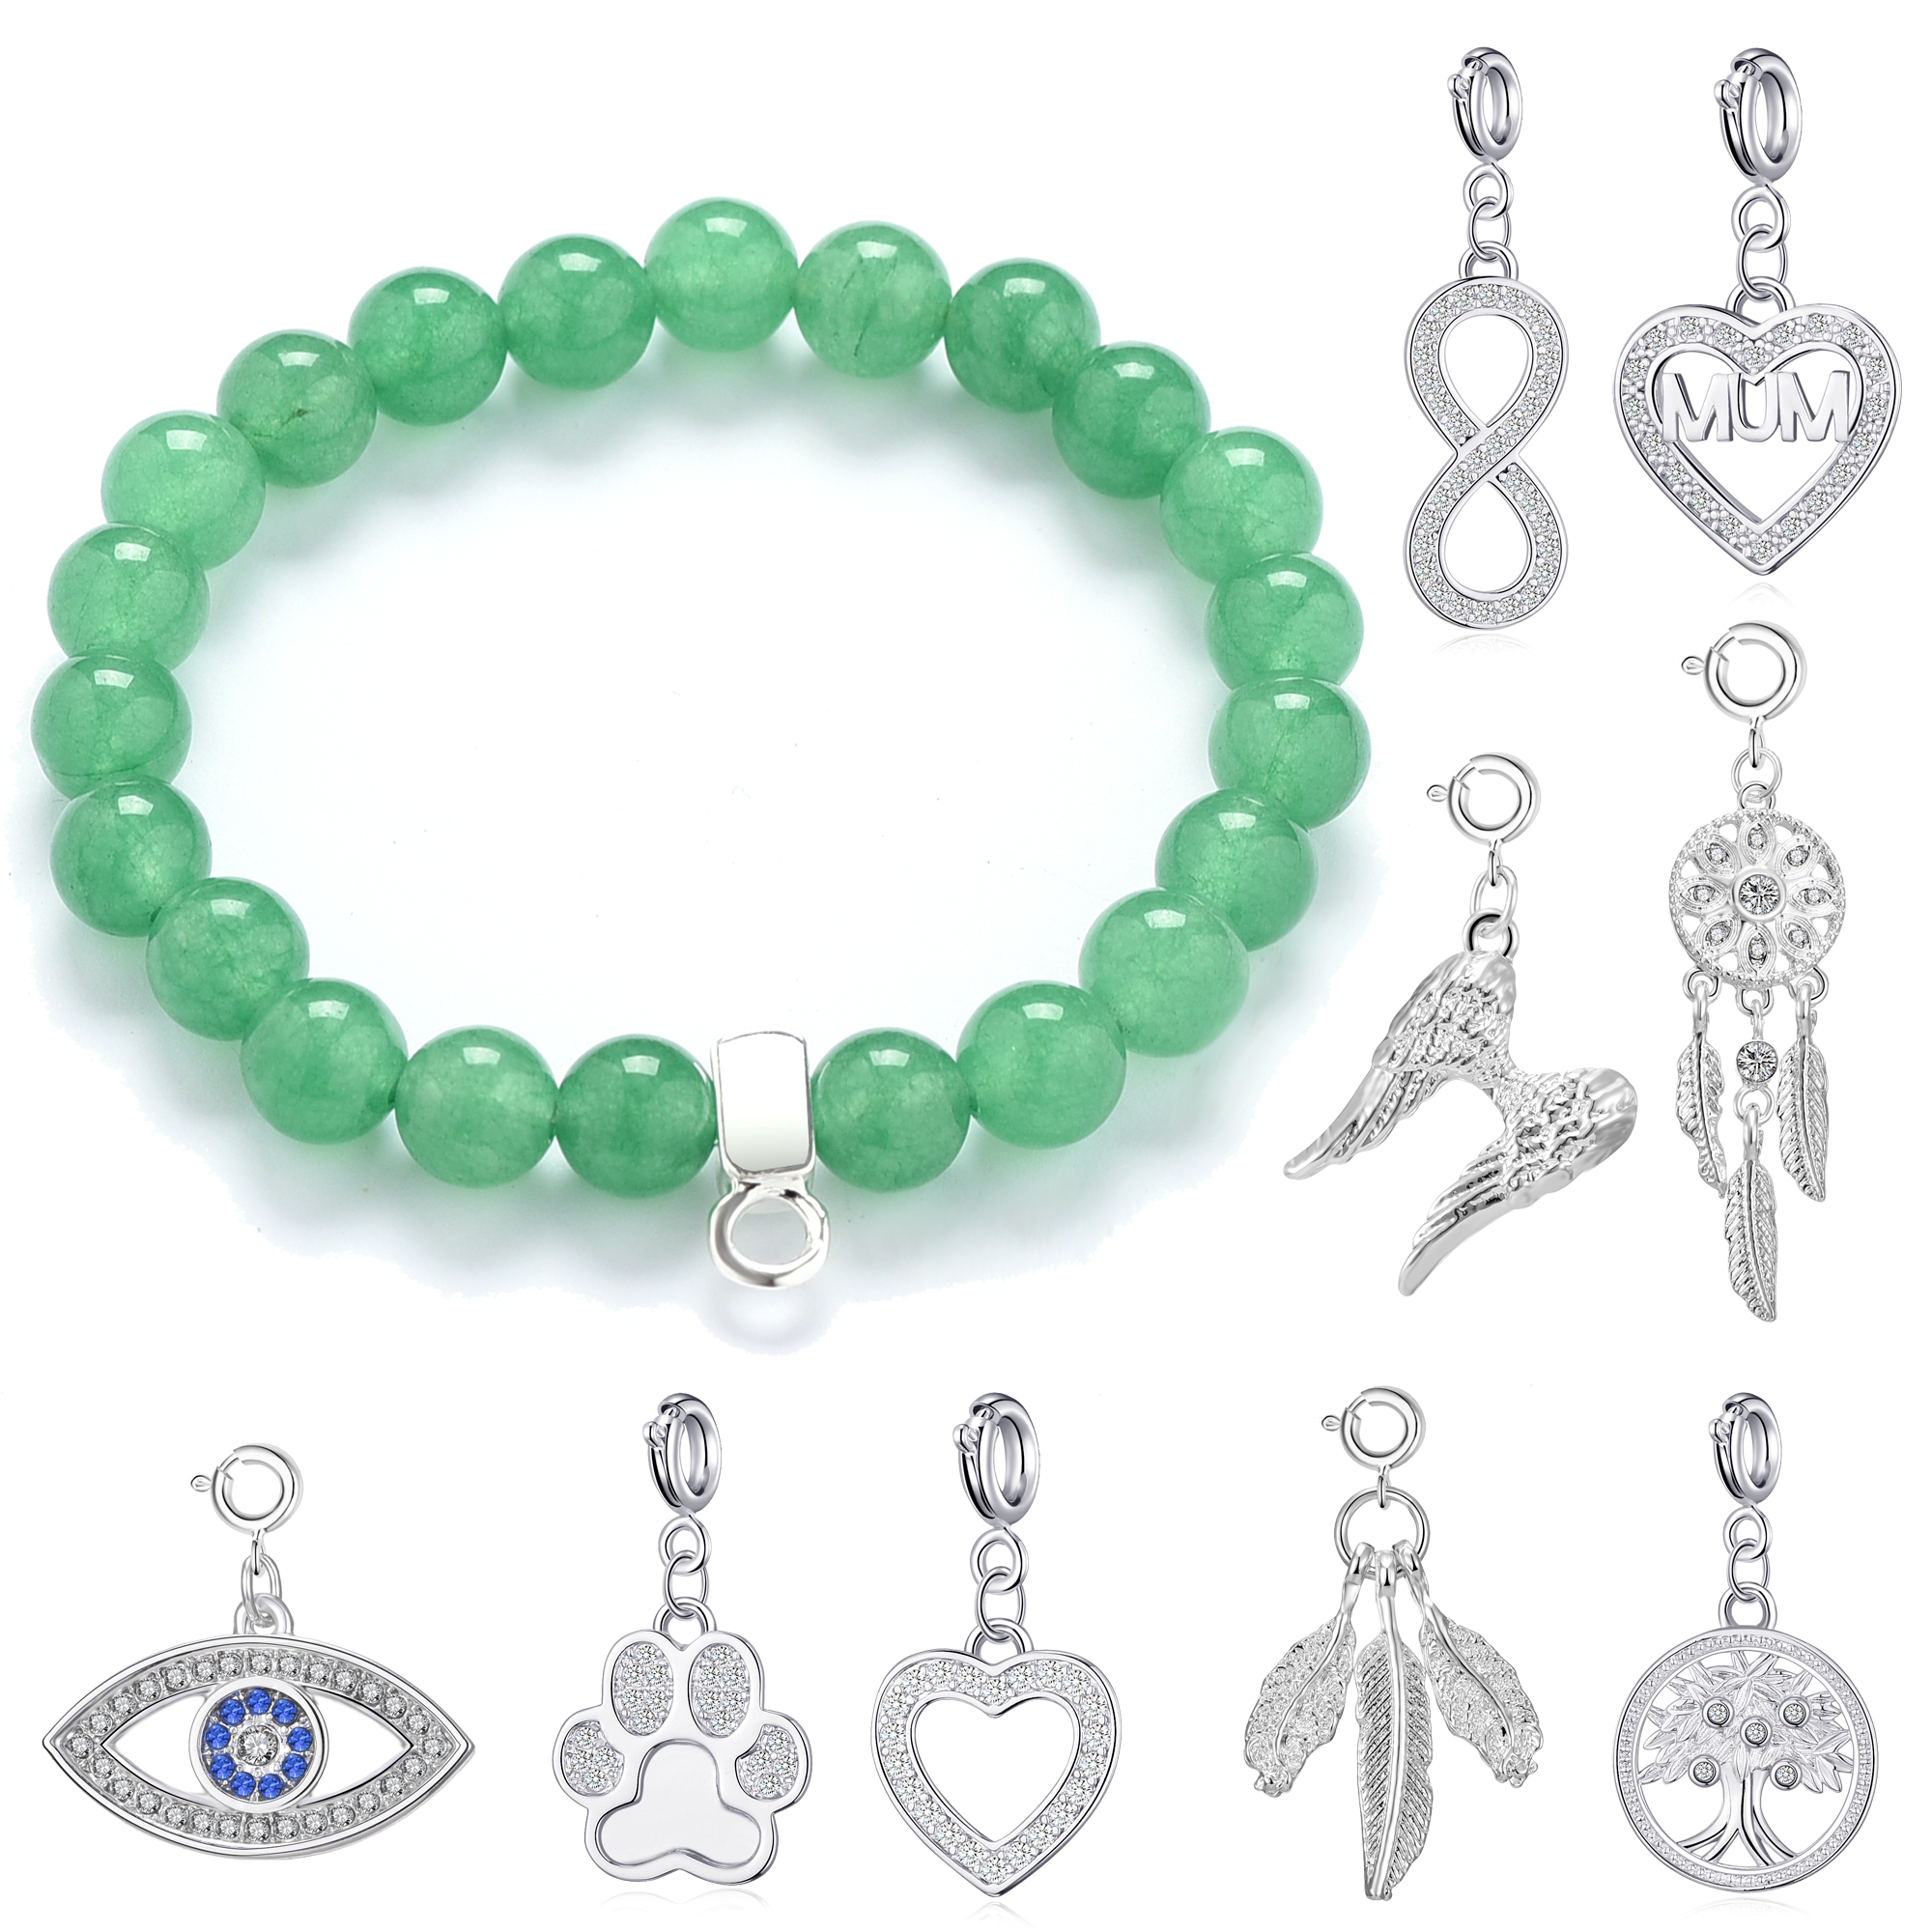 Green Aventurine Gemstone Stretch Bracelet with Charm Created with Zircondia® Crystals by Philip Jones Jewellery